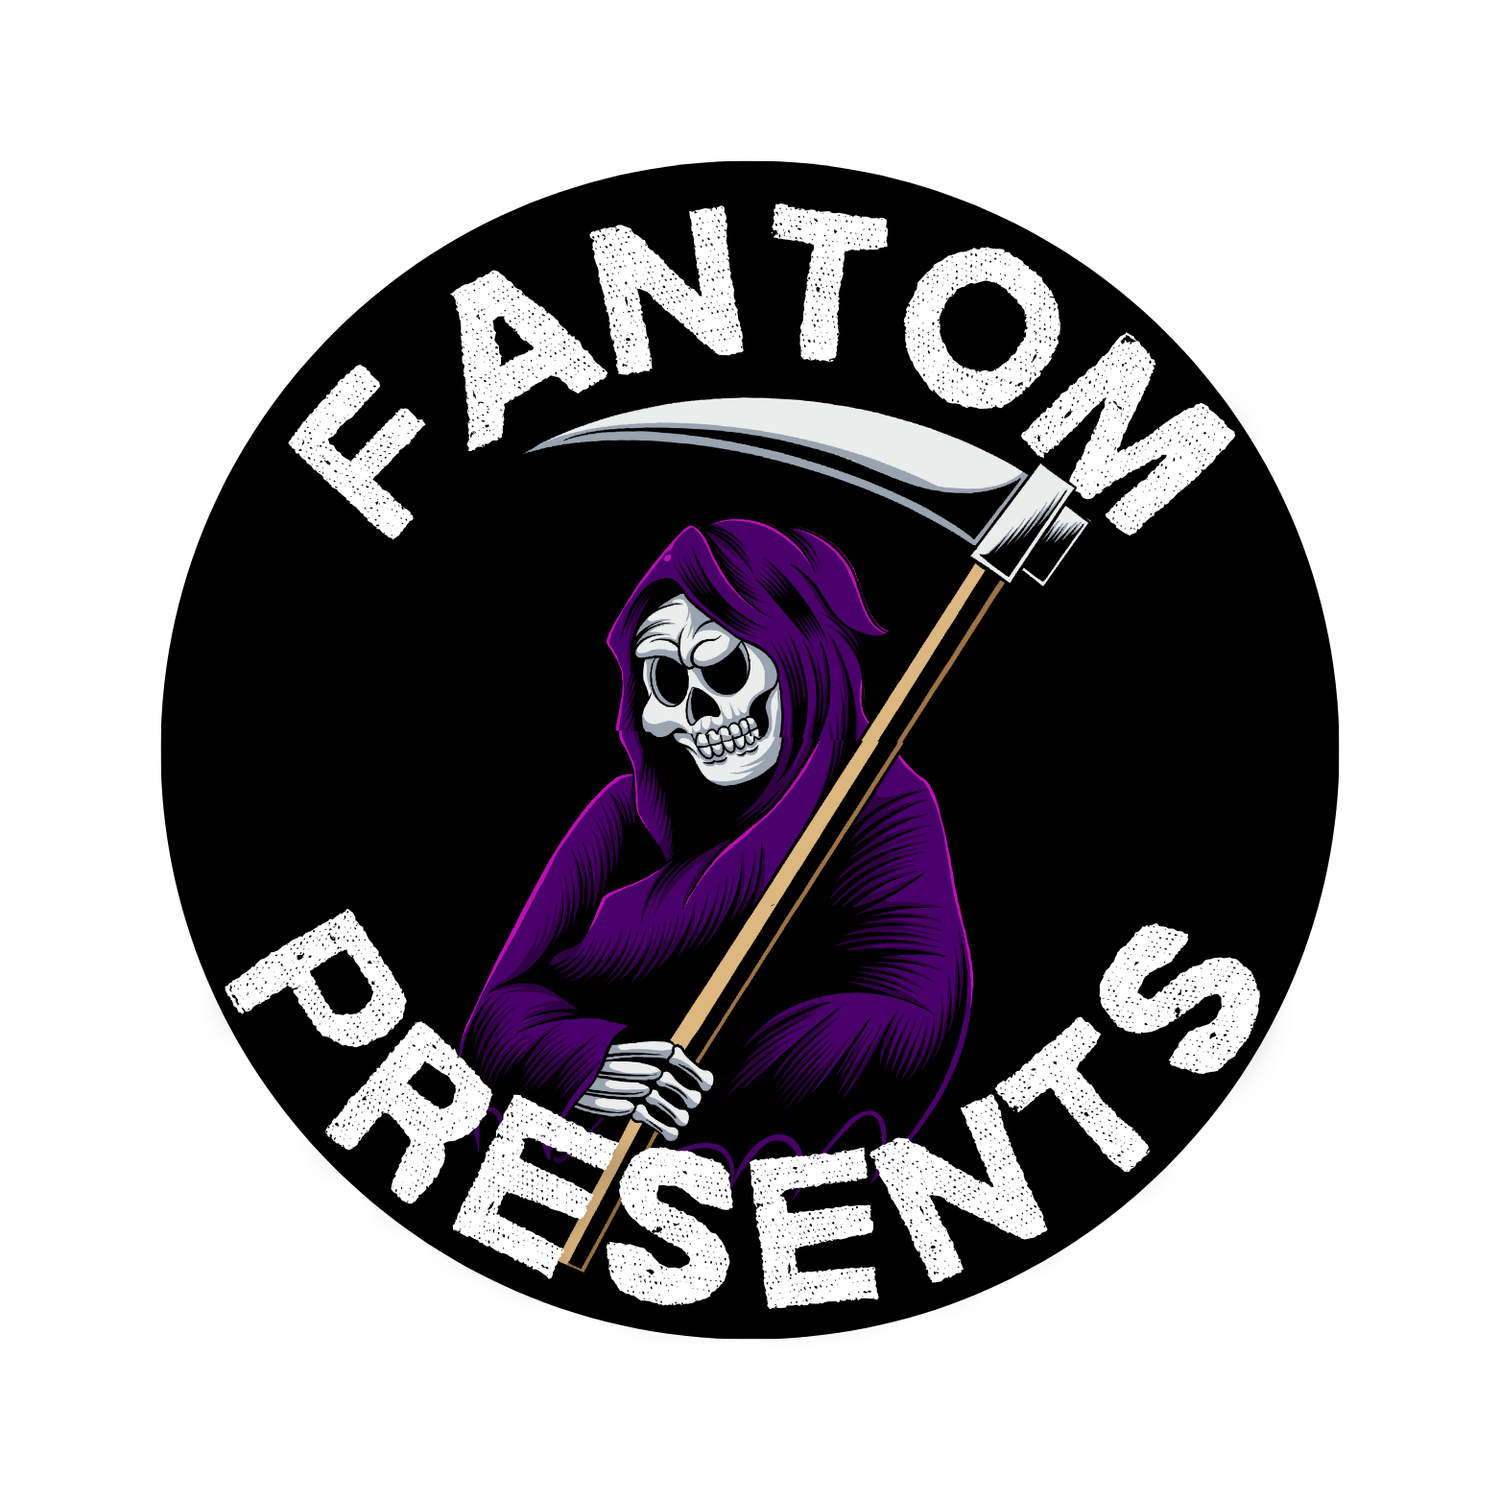 Fantom Presents